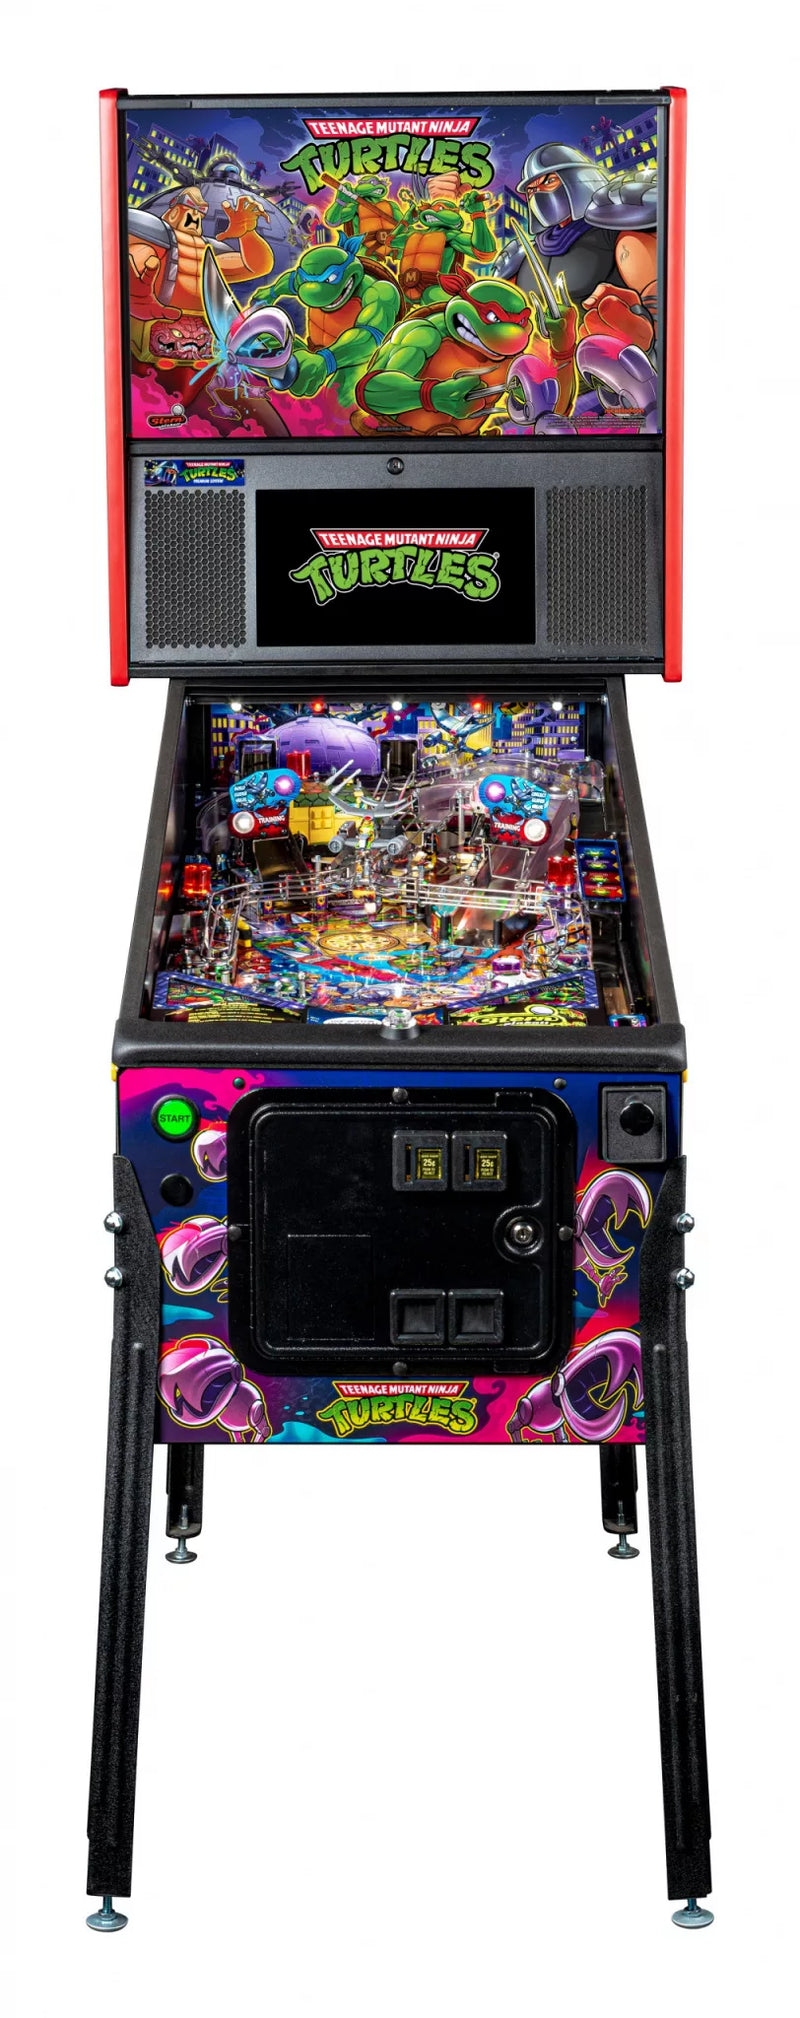 TMNT Premium Pinball Machine by Stern [DEPOSIT]